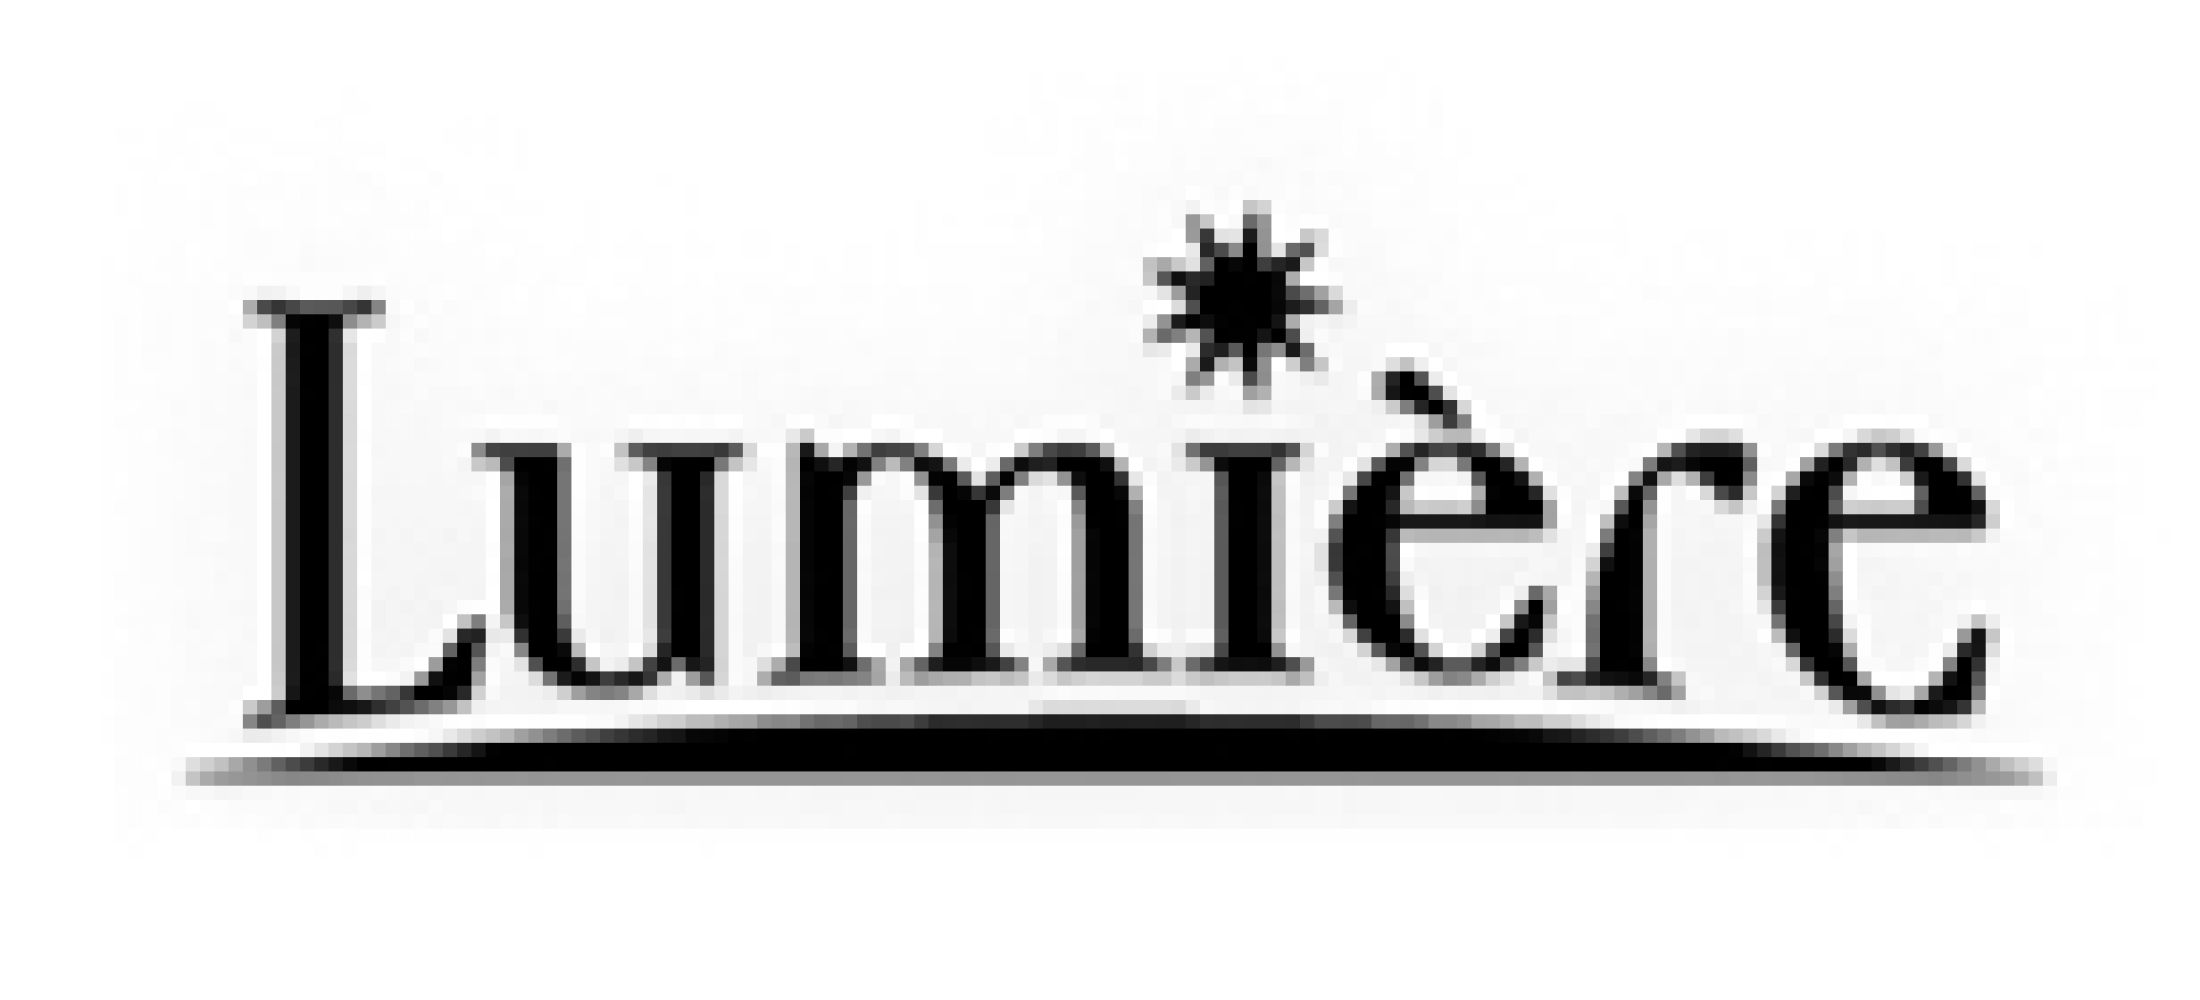 Lumiere - ODMedia Aggregation Services